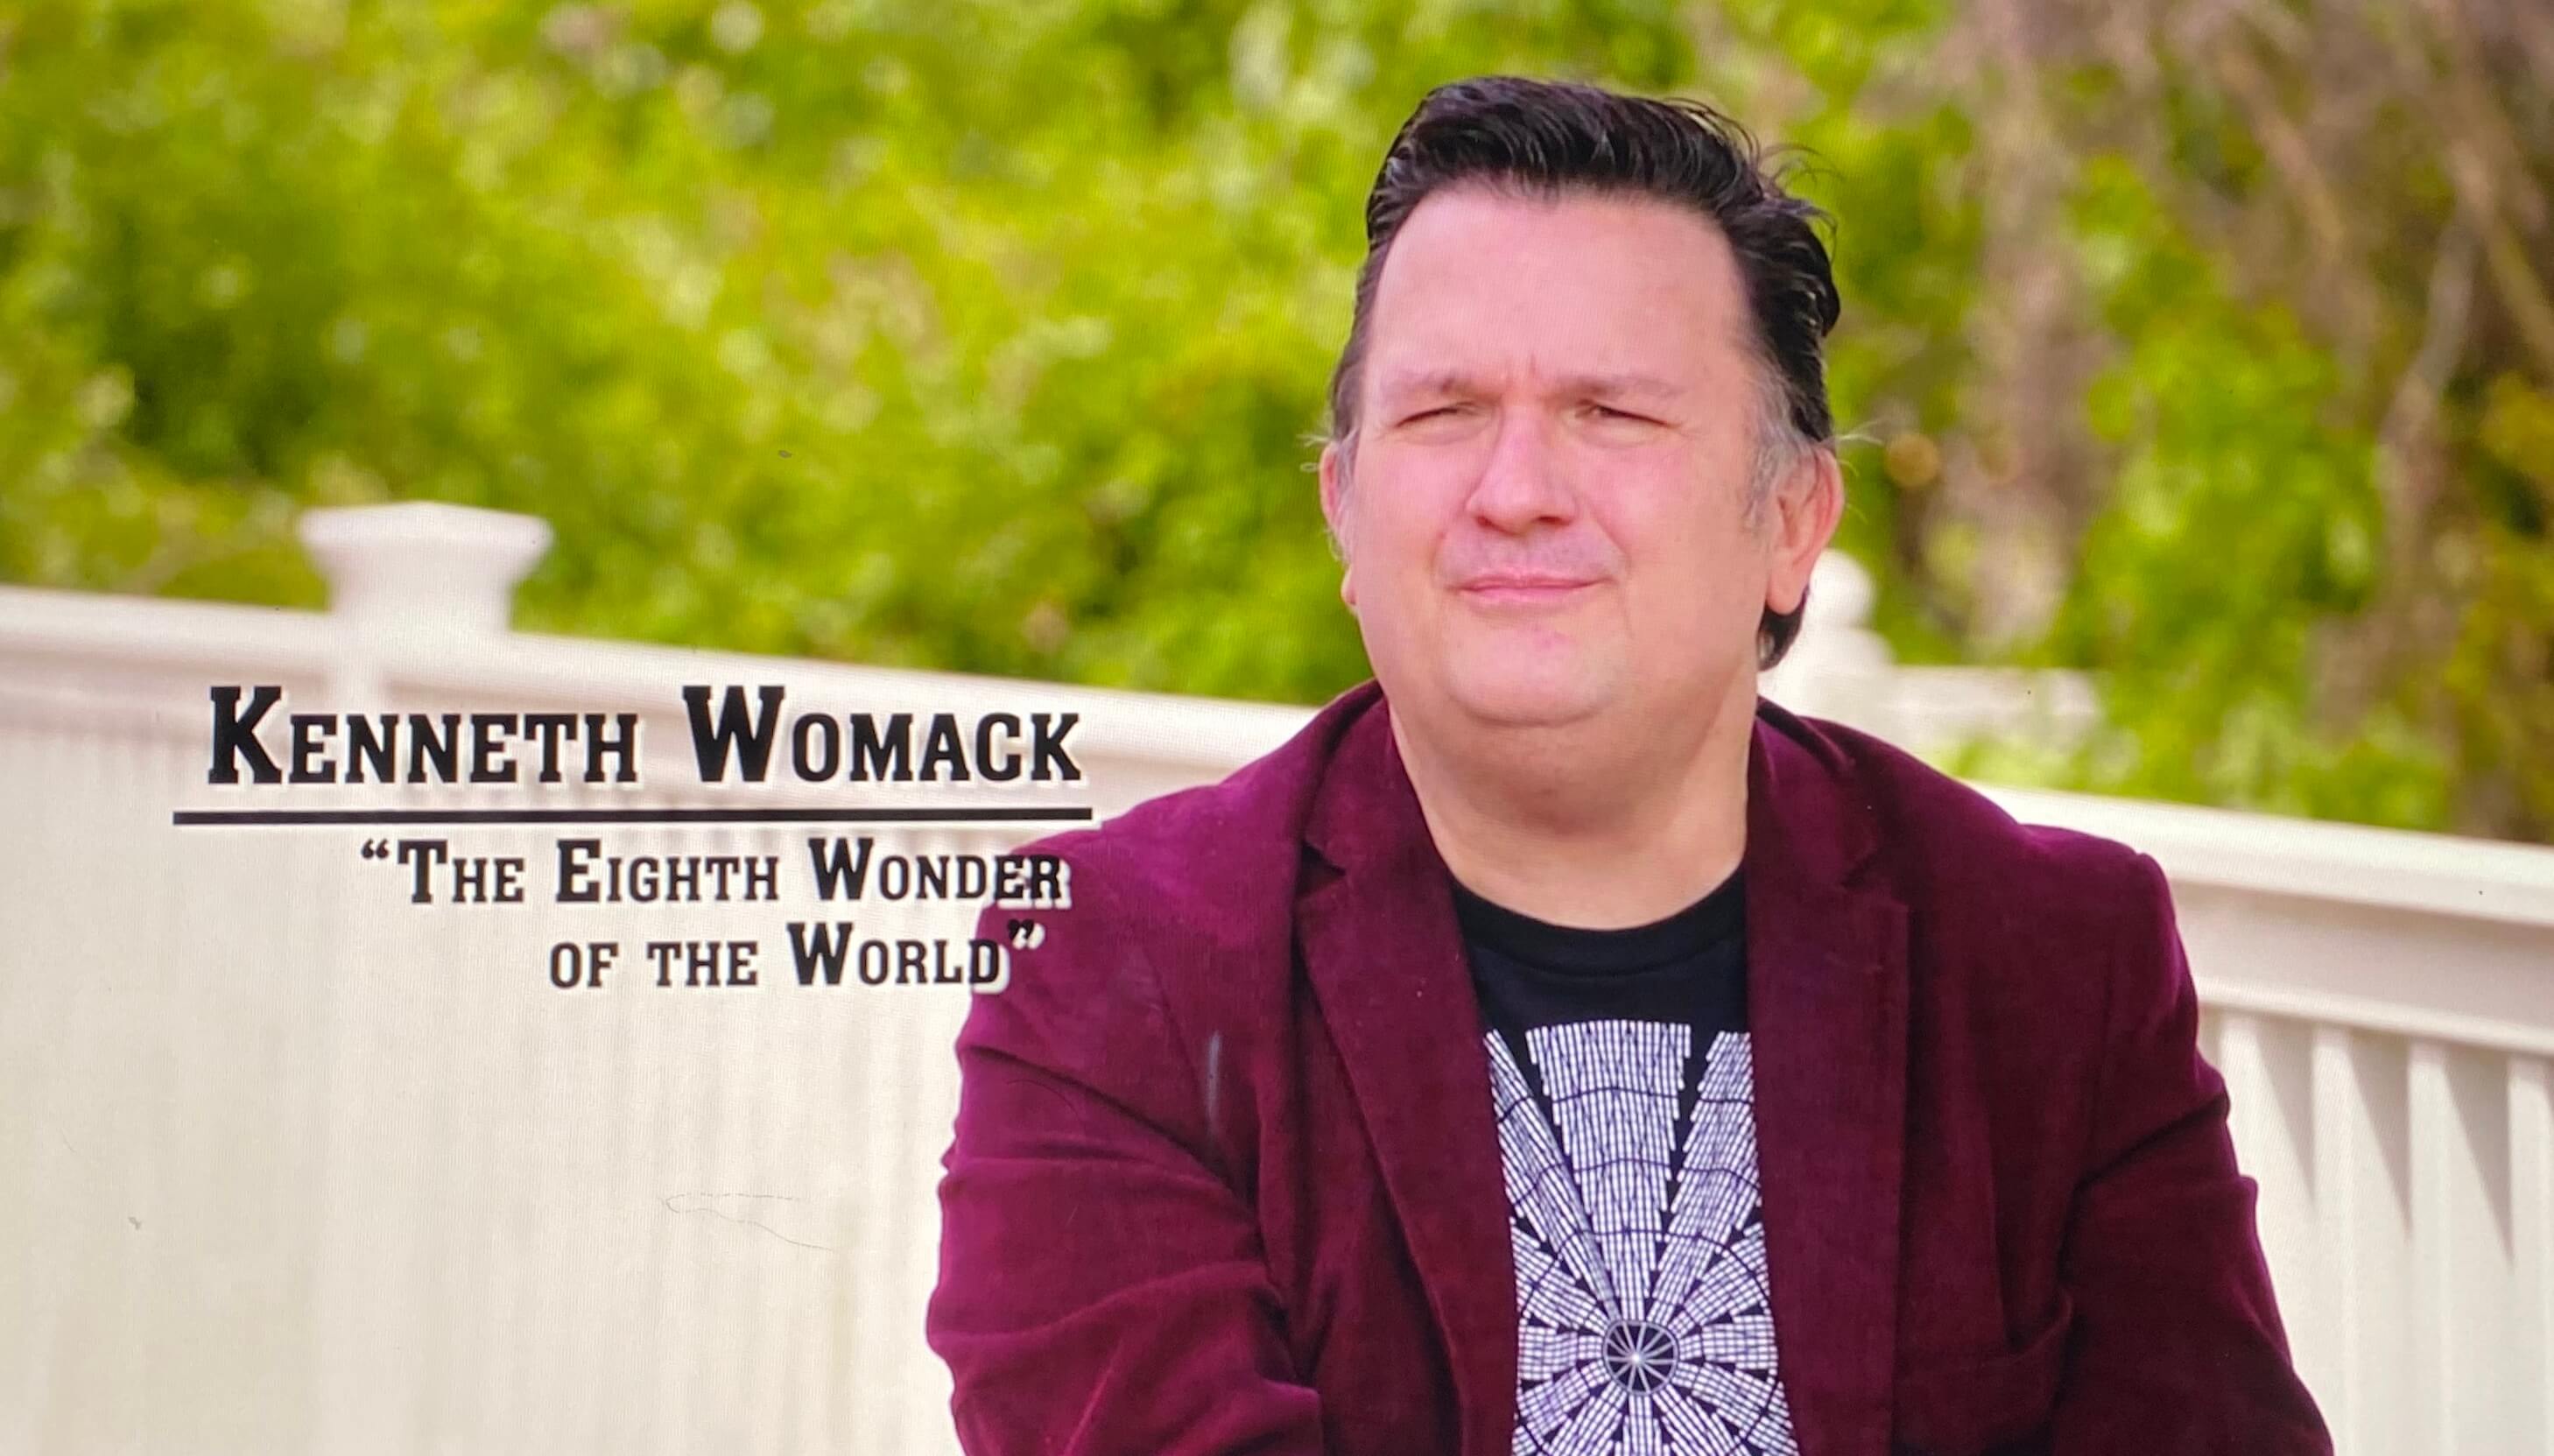 Professor Womack Appears on “American Built” Episode